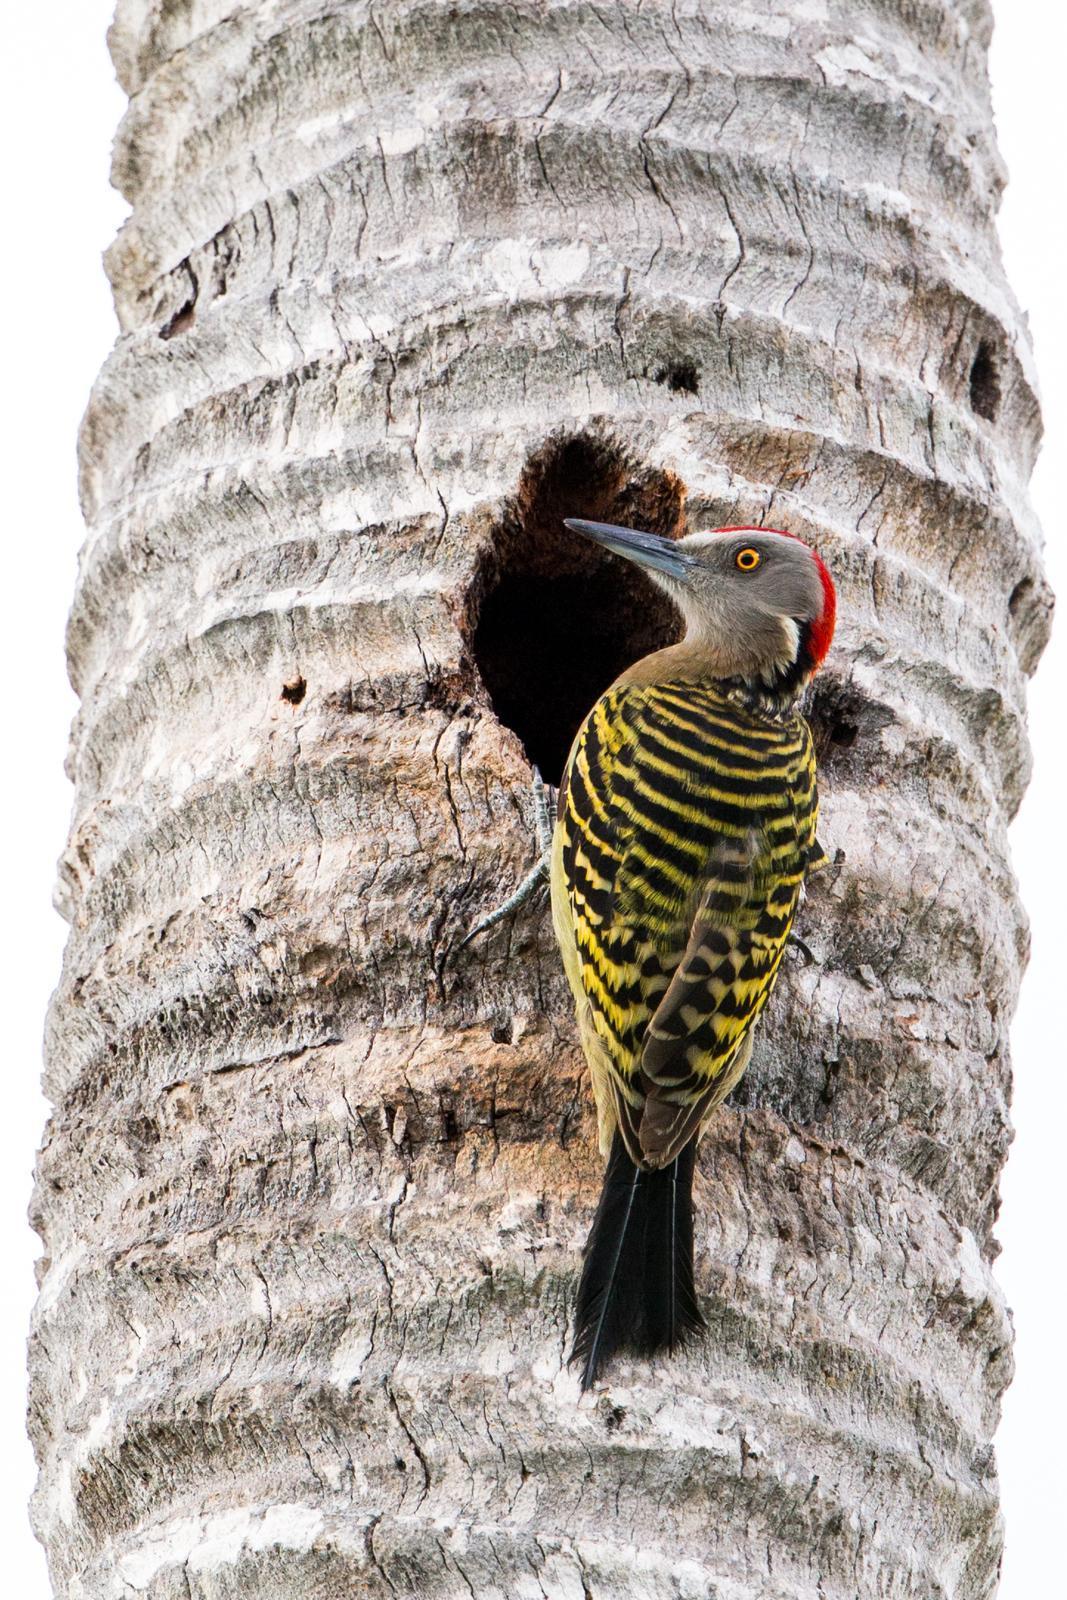 Hispaniolan Woodpecker Photo by Rhys Marsh